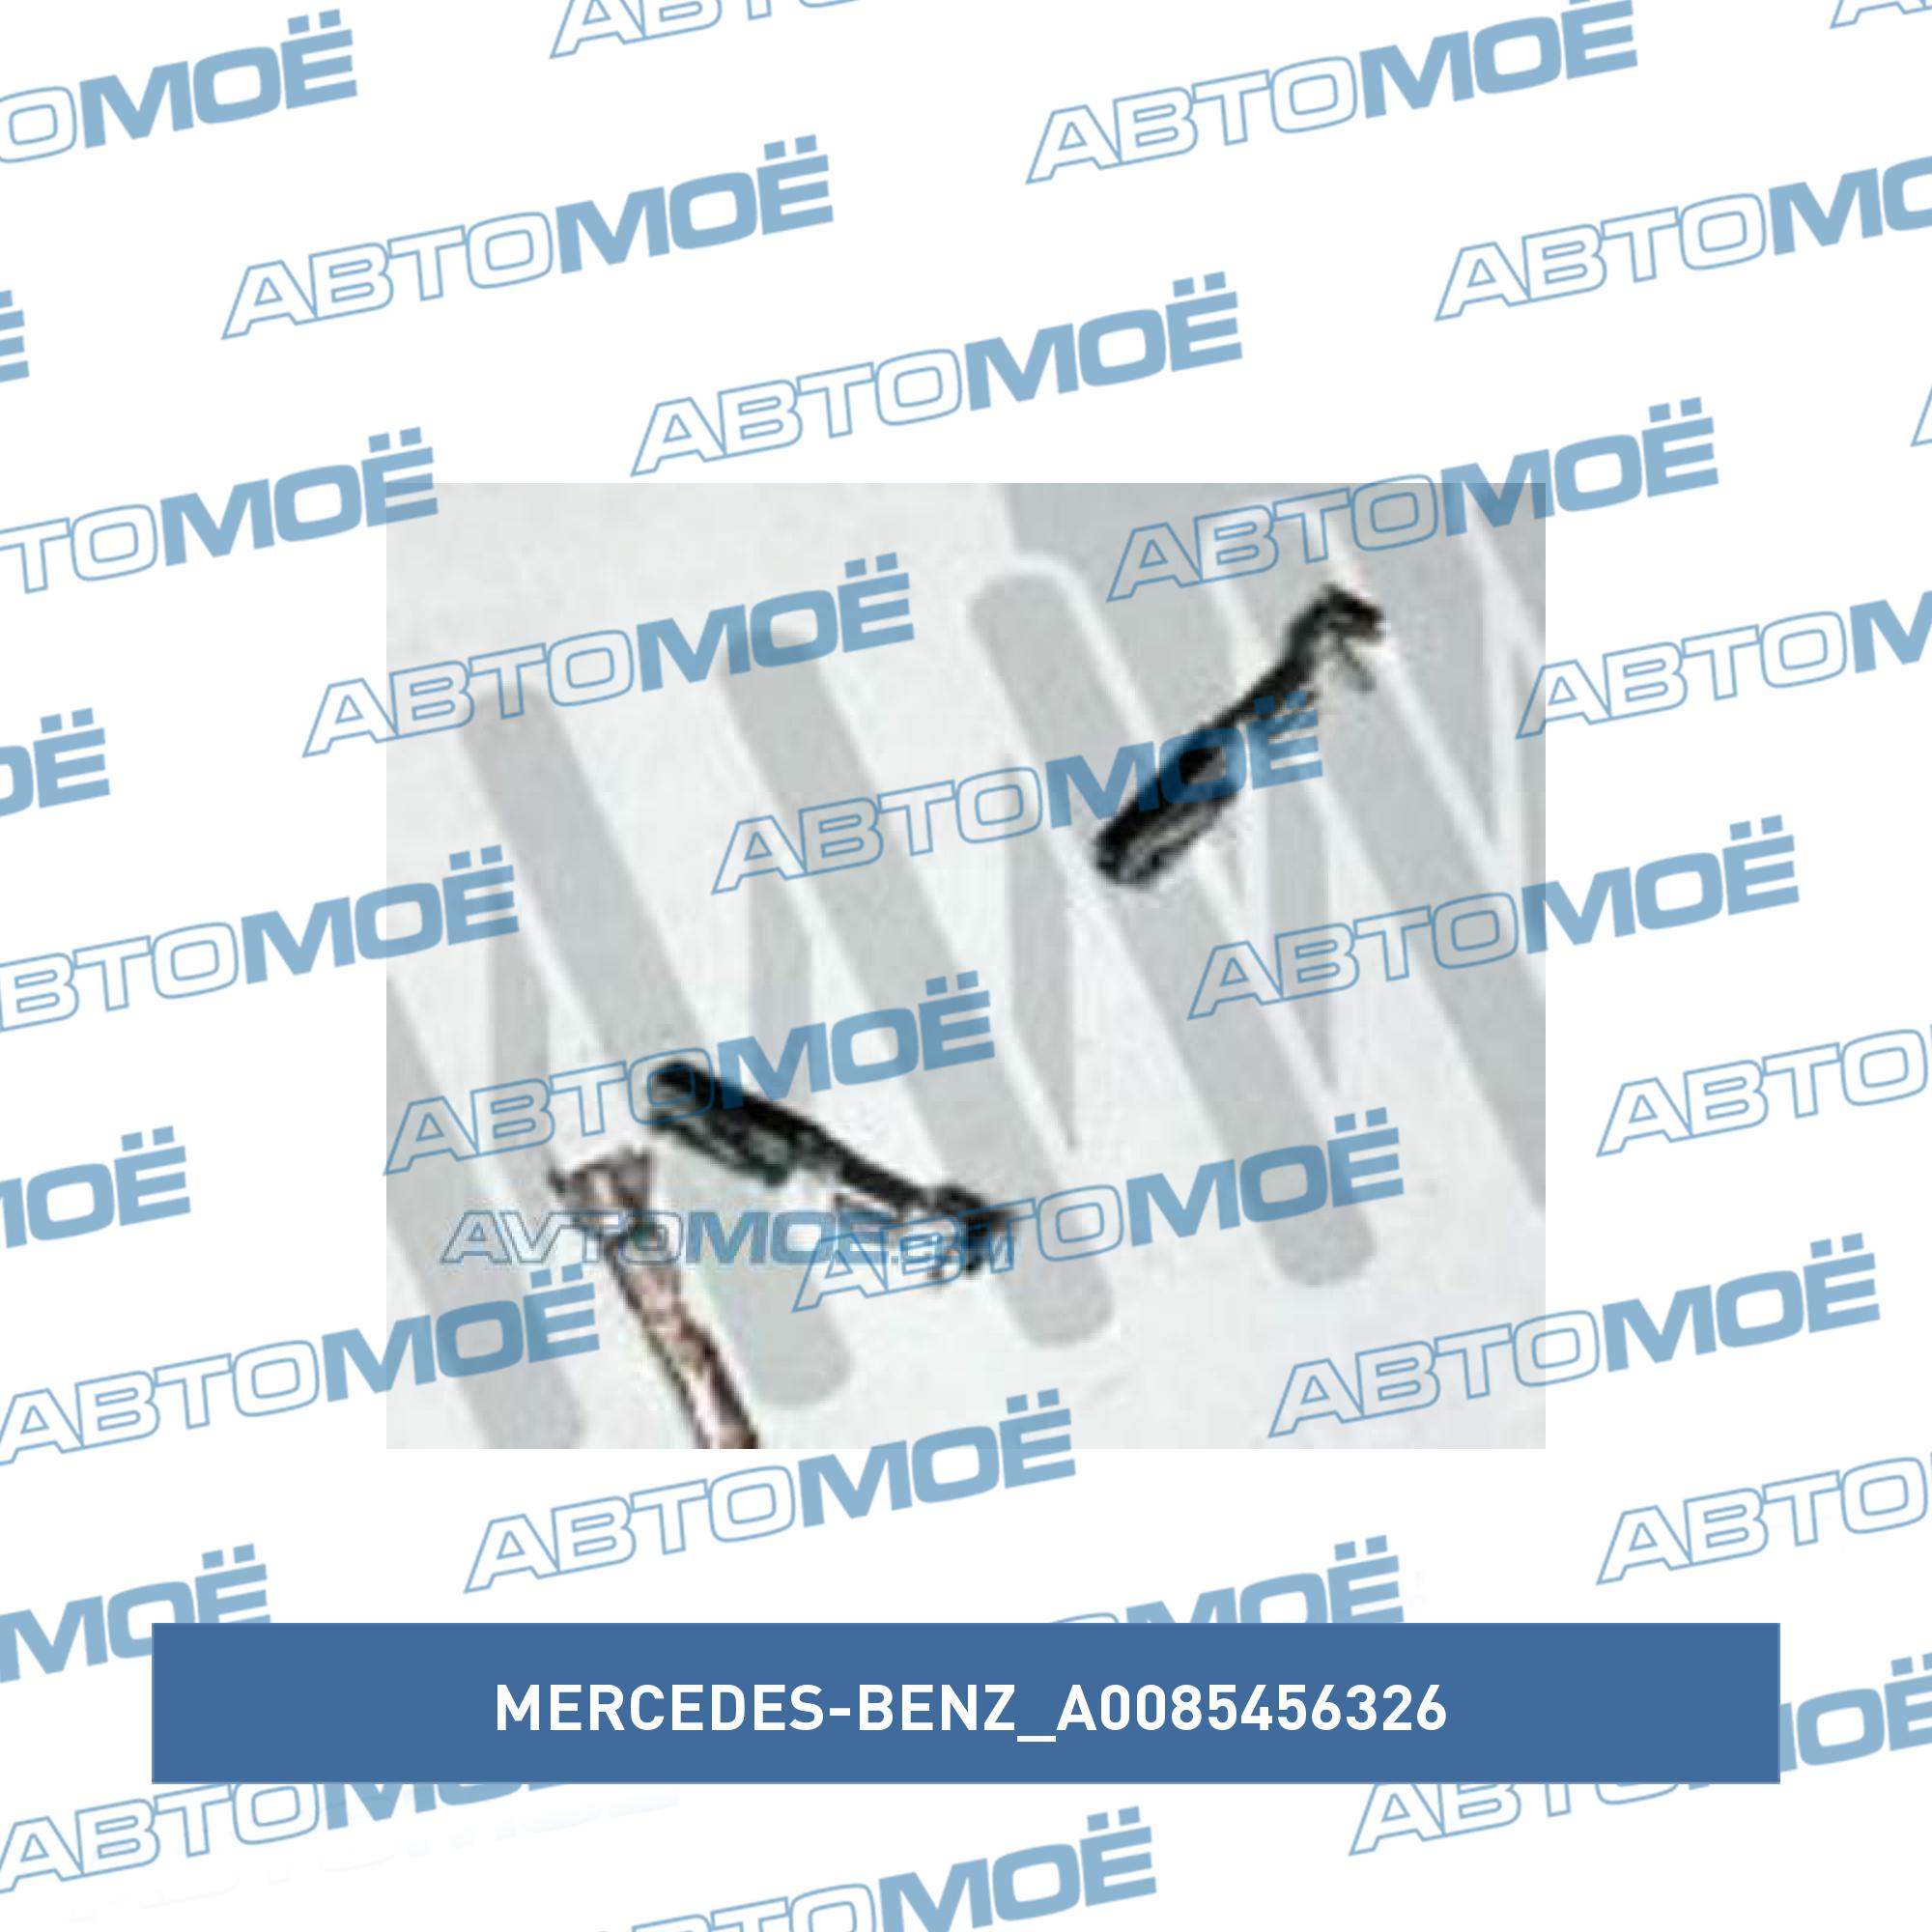 Клемма для разъема MERCEDES-BENZ A0085456326